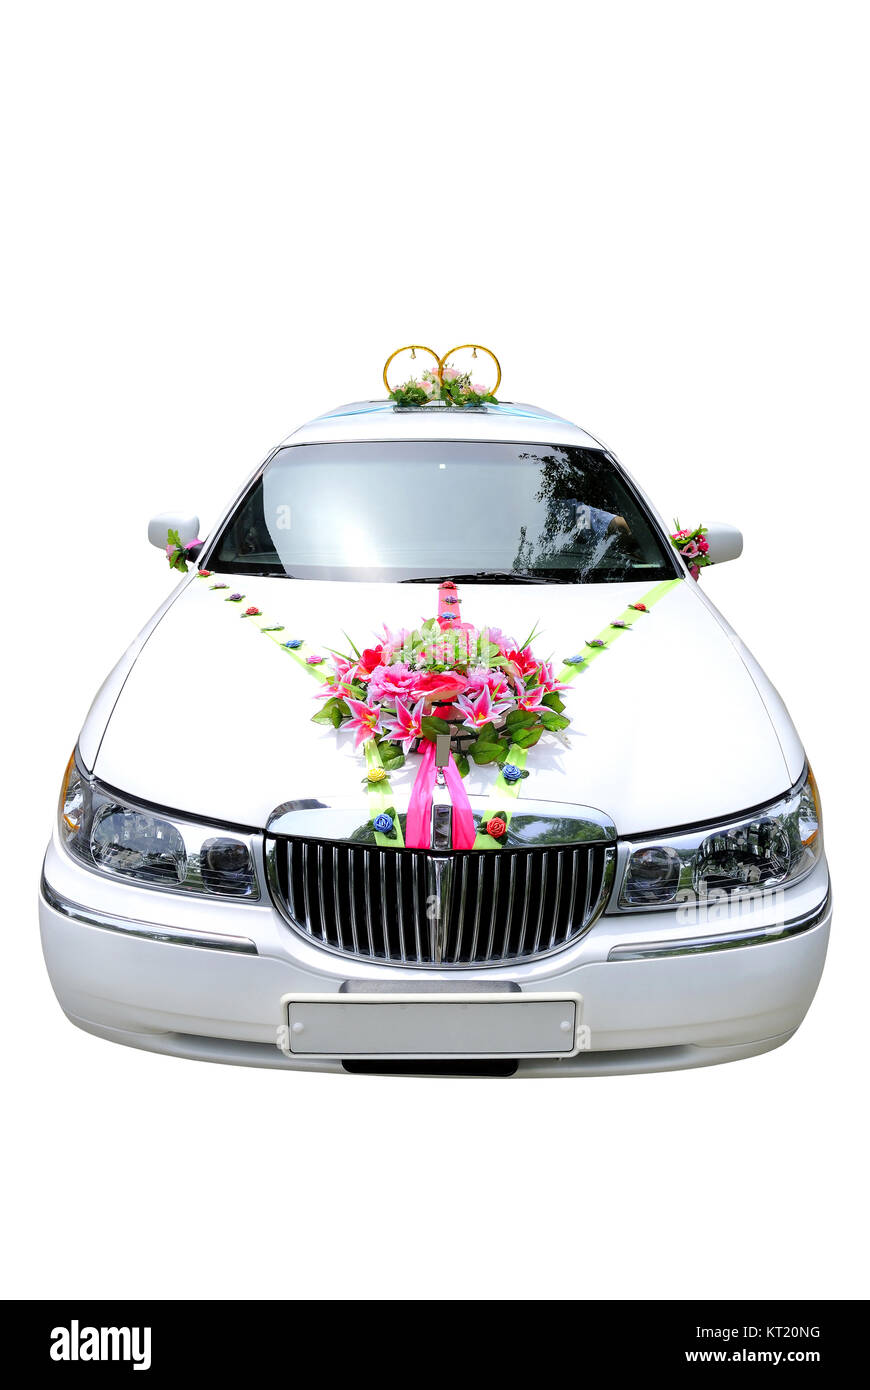 wedding car Stock Photo